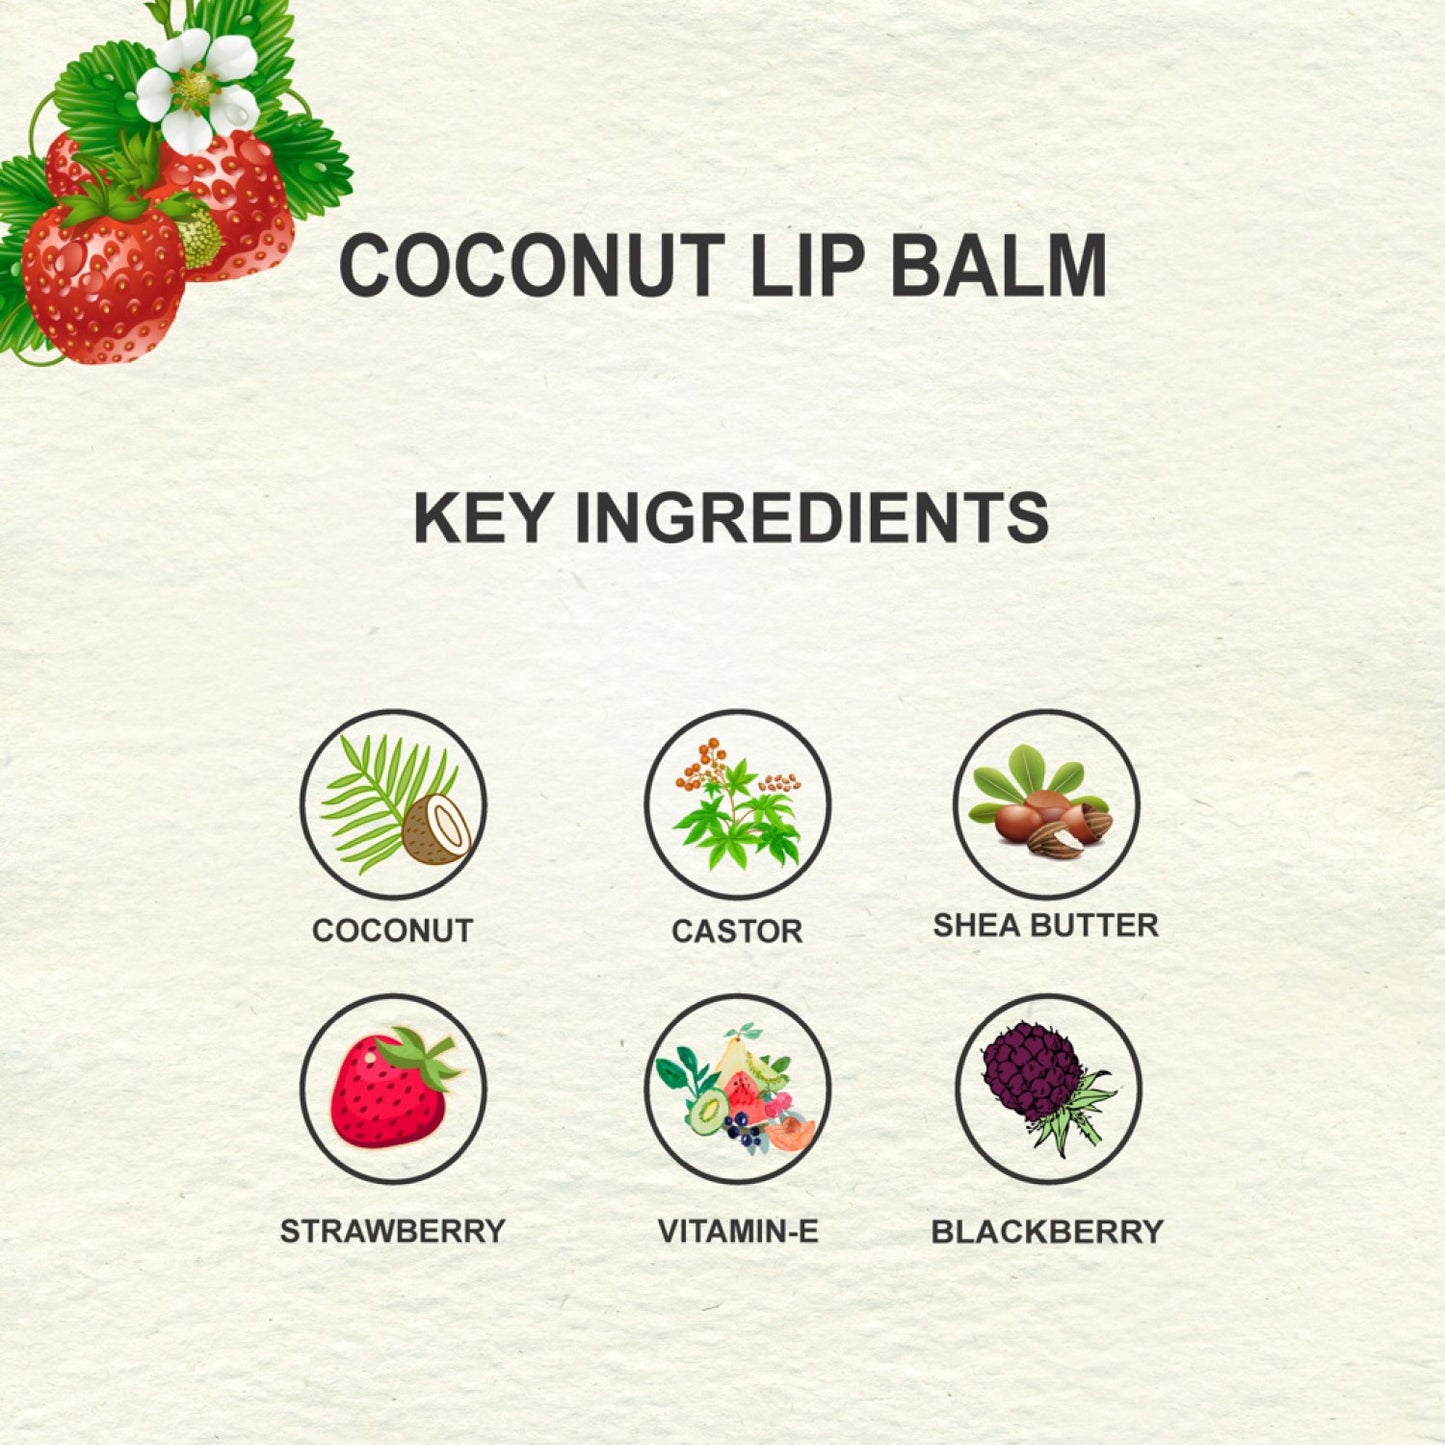 Love Earth Organic Coconut Lip Balm - 10g